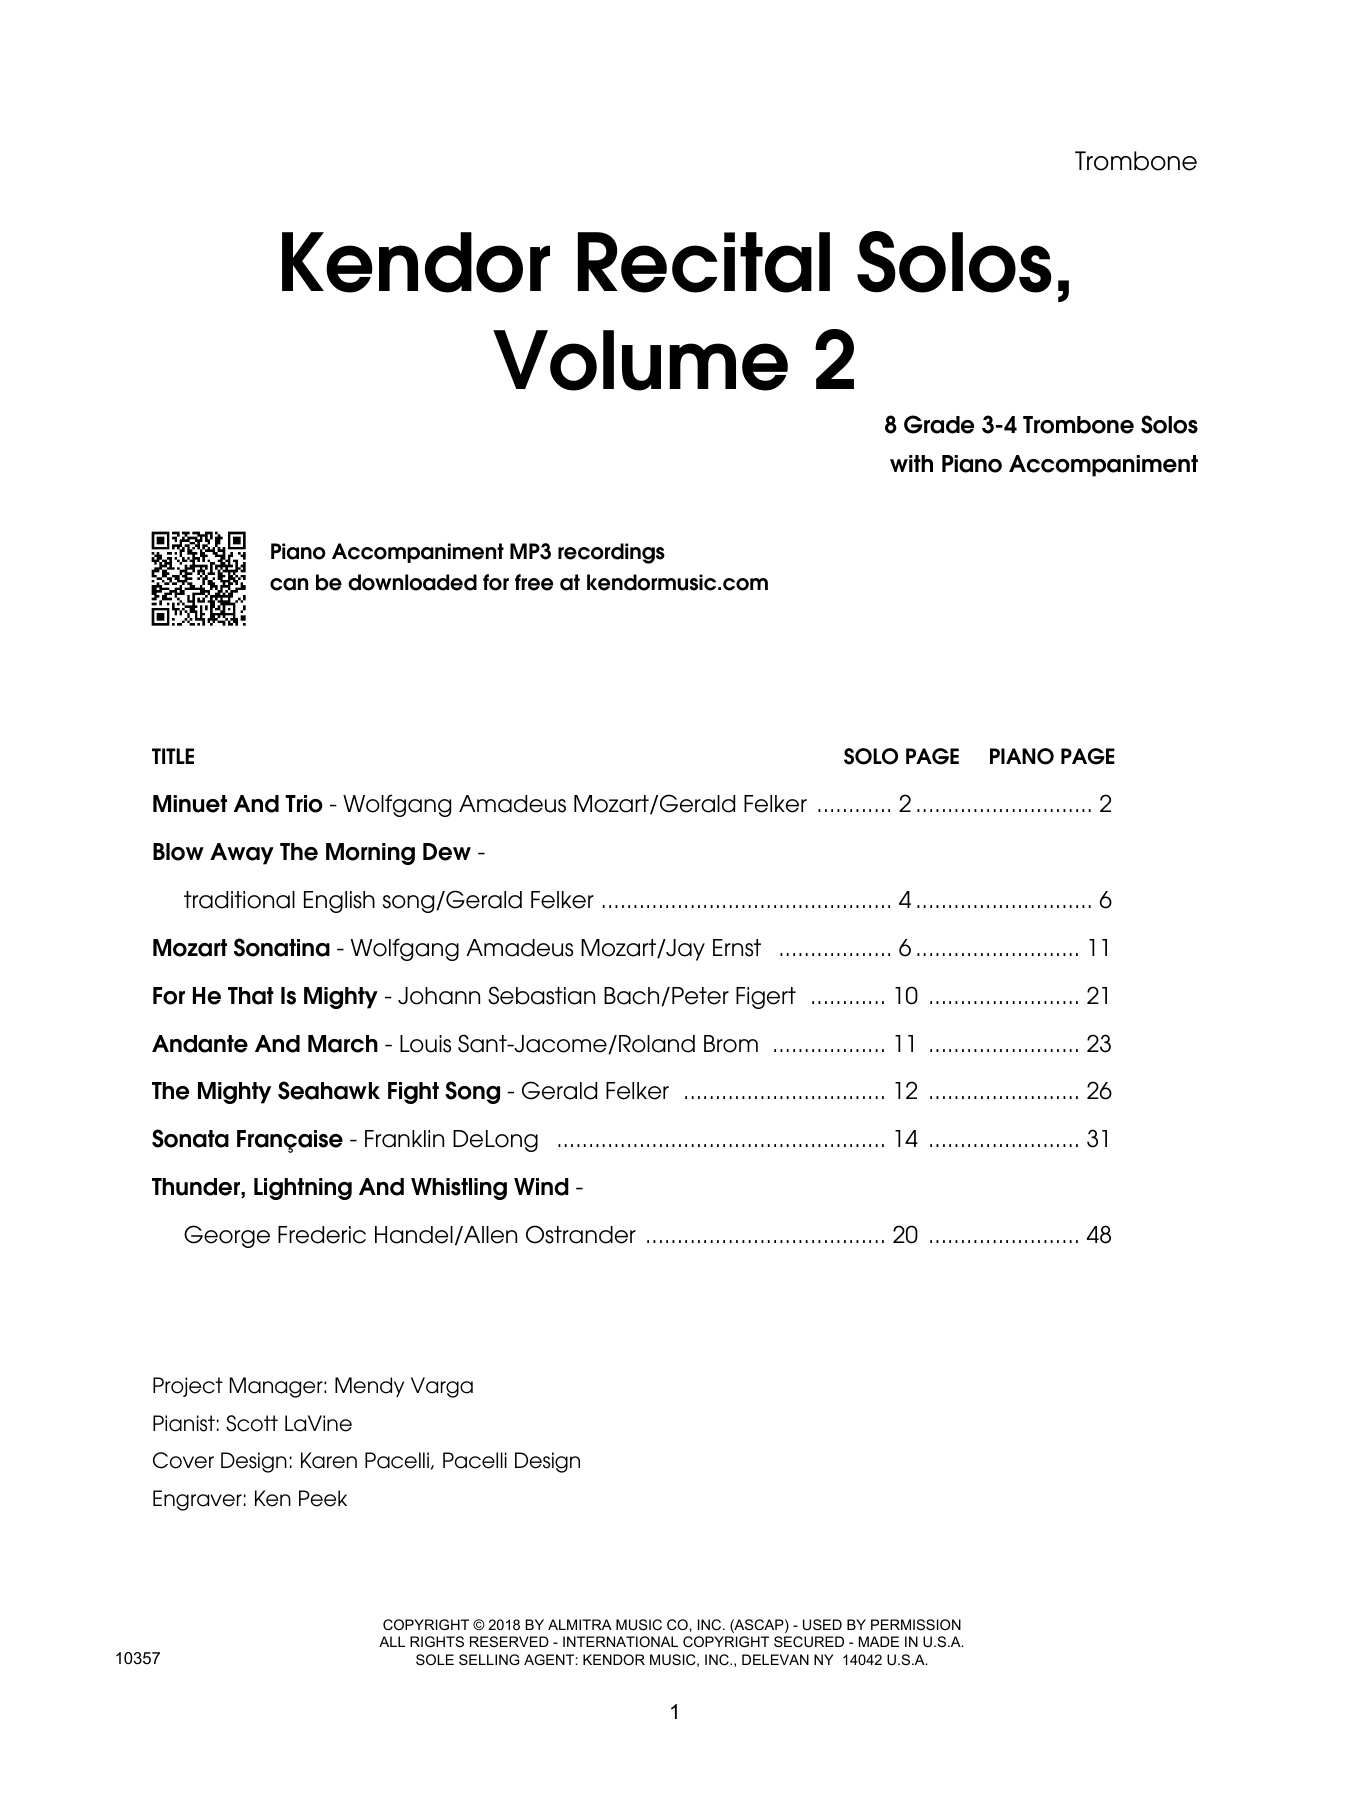 Download Various Kendor Recital Solos, Volume 2 - Trombo Sheet Music